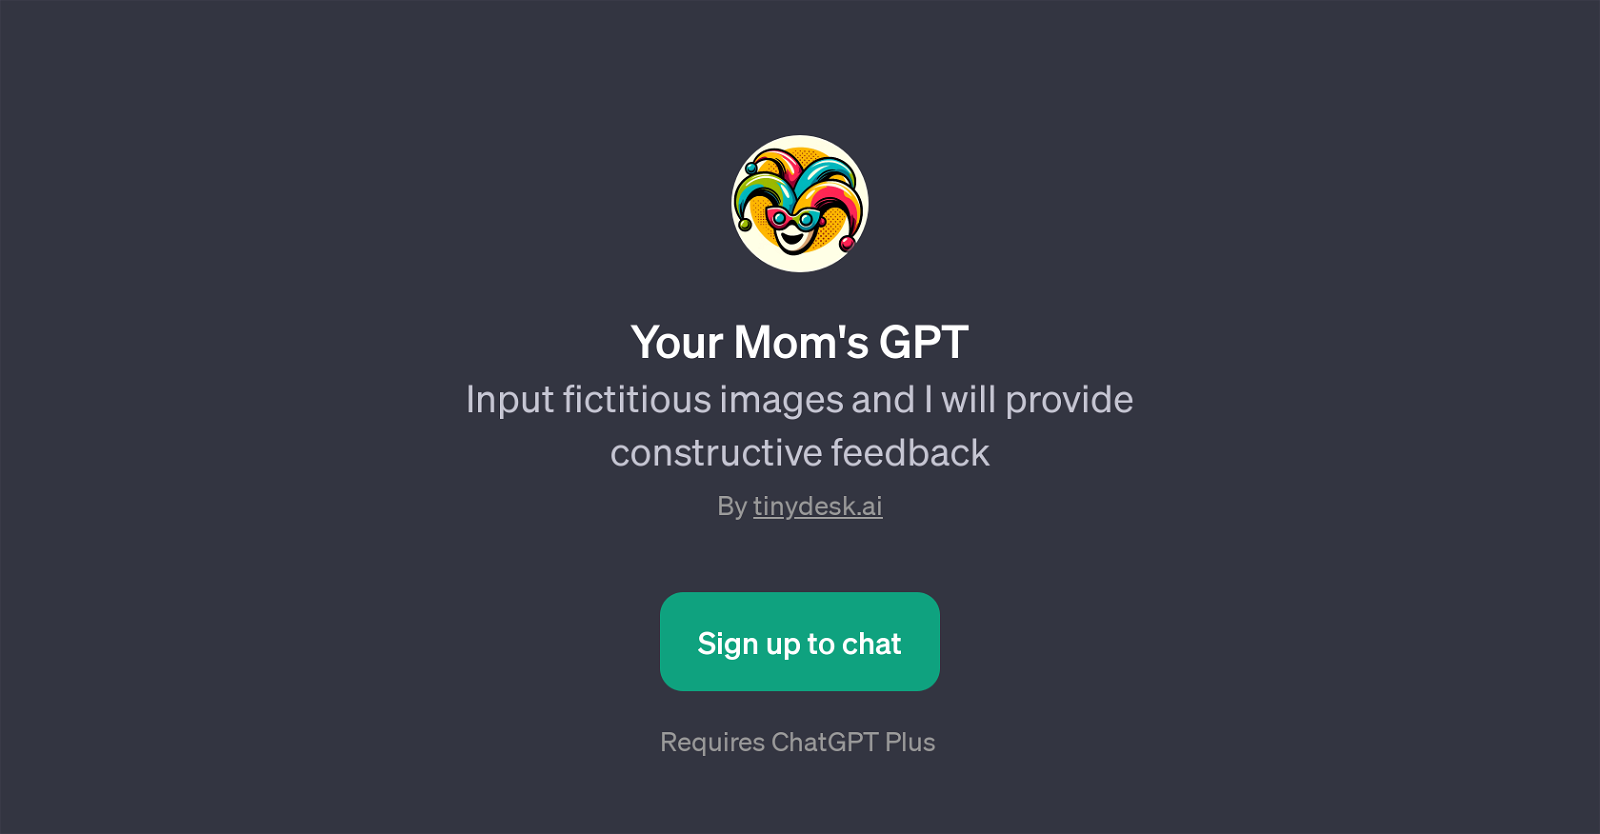 Your Mom's GPT website